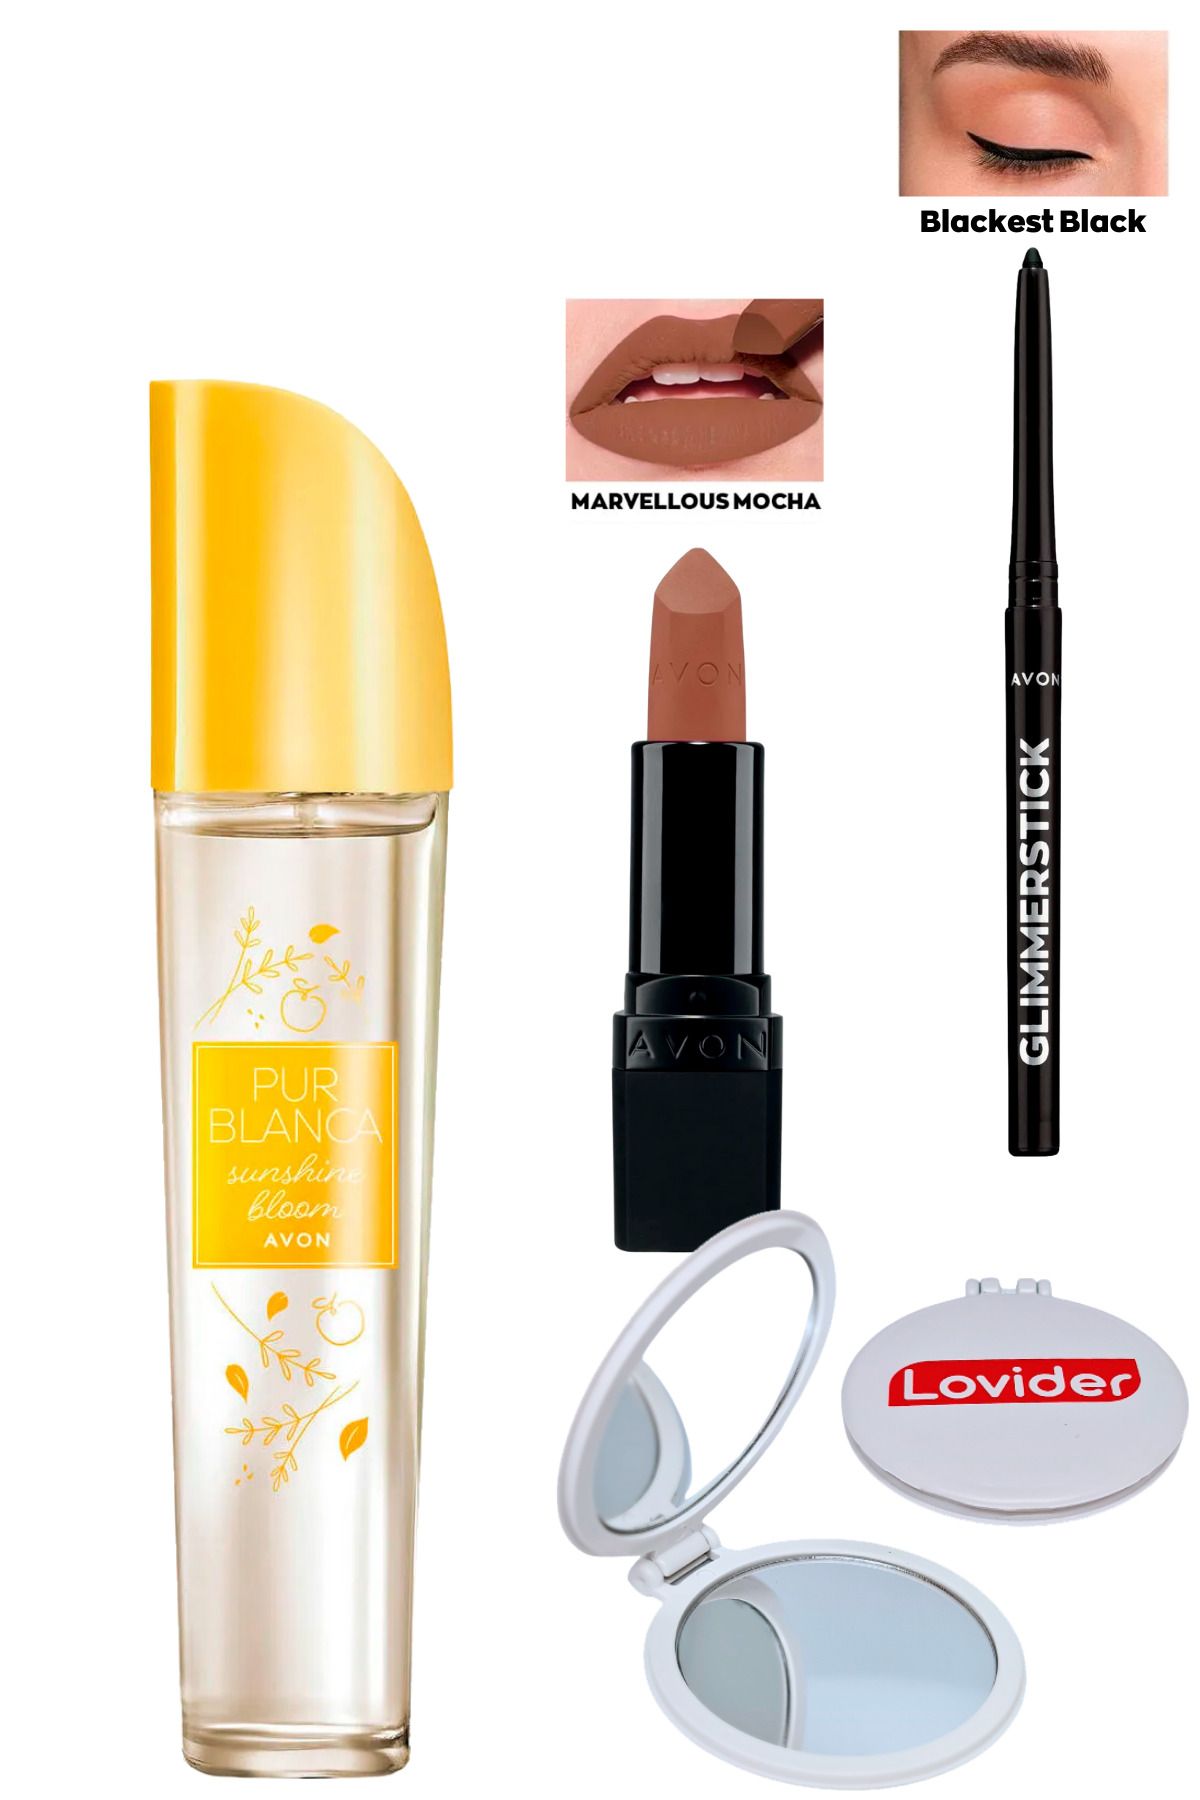 Avon Pur Blanca Sunshine Bloom Kadın Parfüm + Marvellous Mocha Ruj + Siyah Göz Kalemi + Lovider Cep Ayna